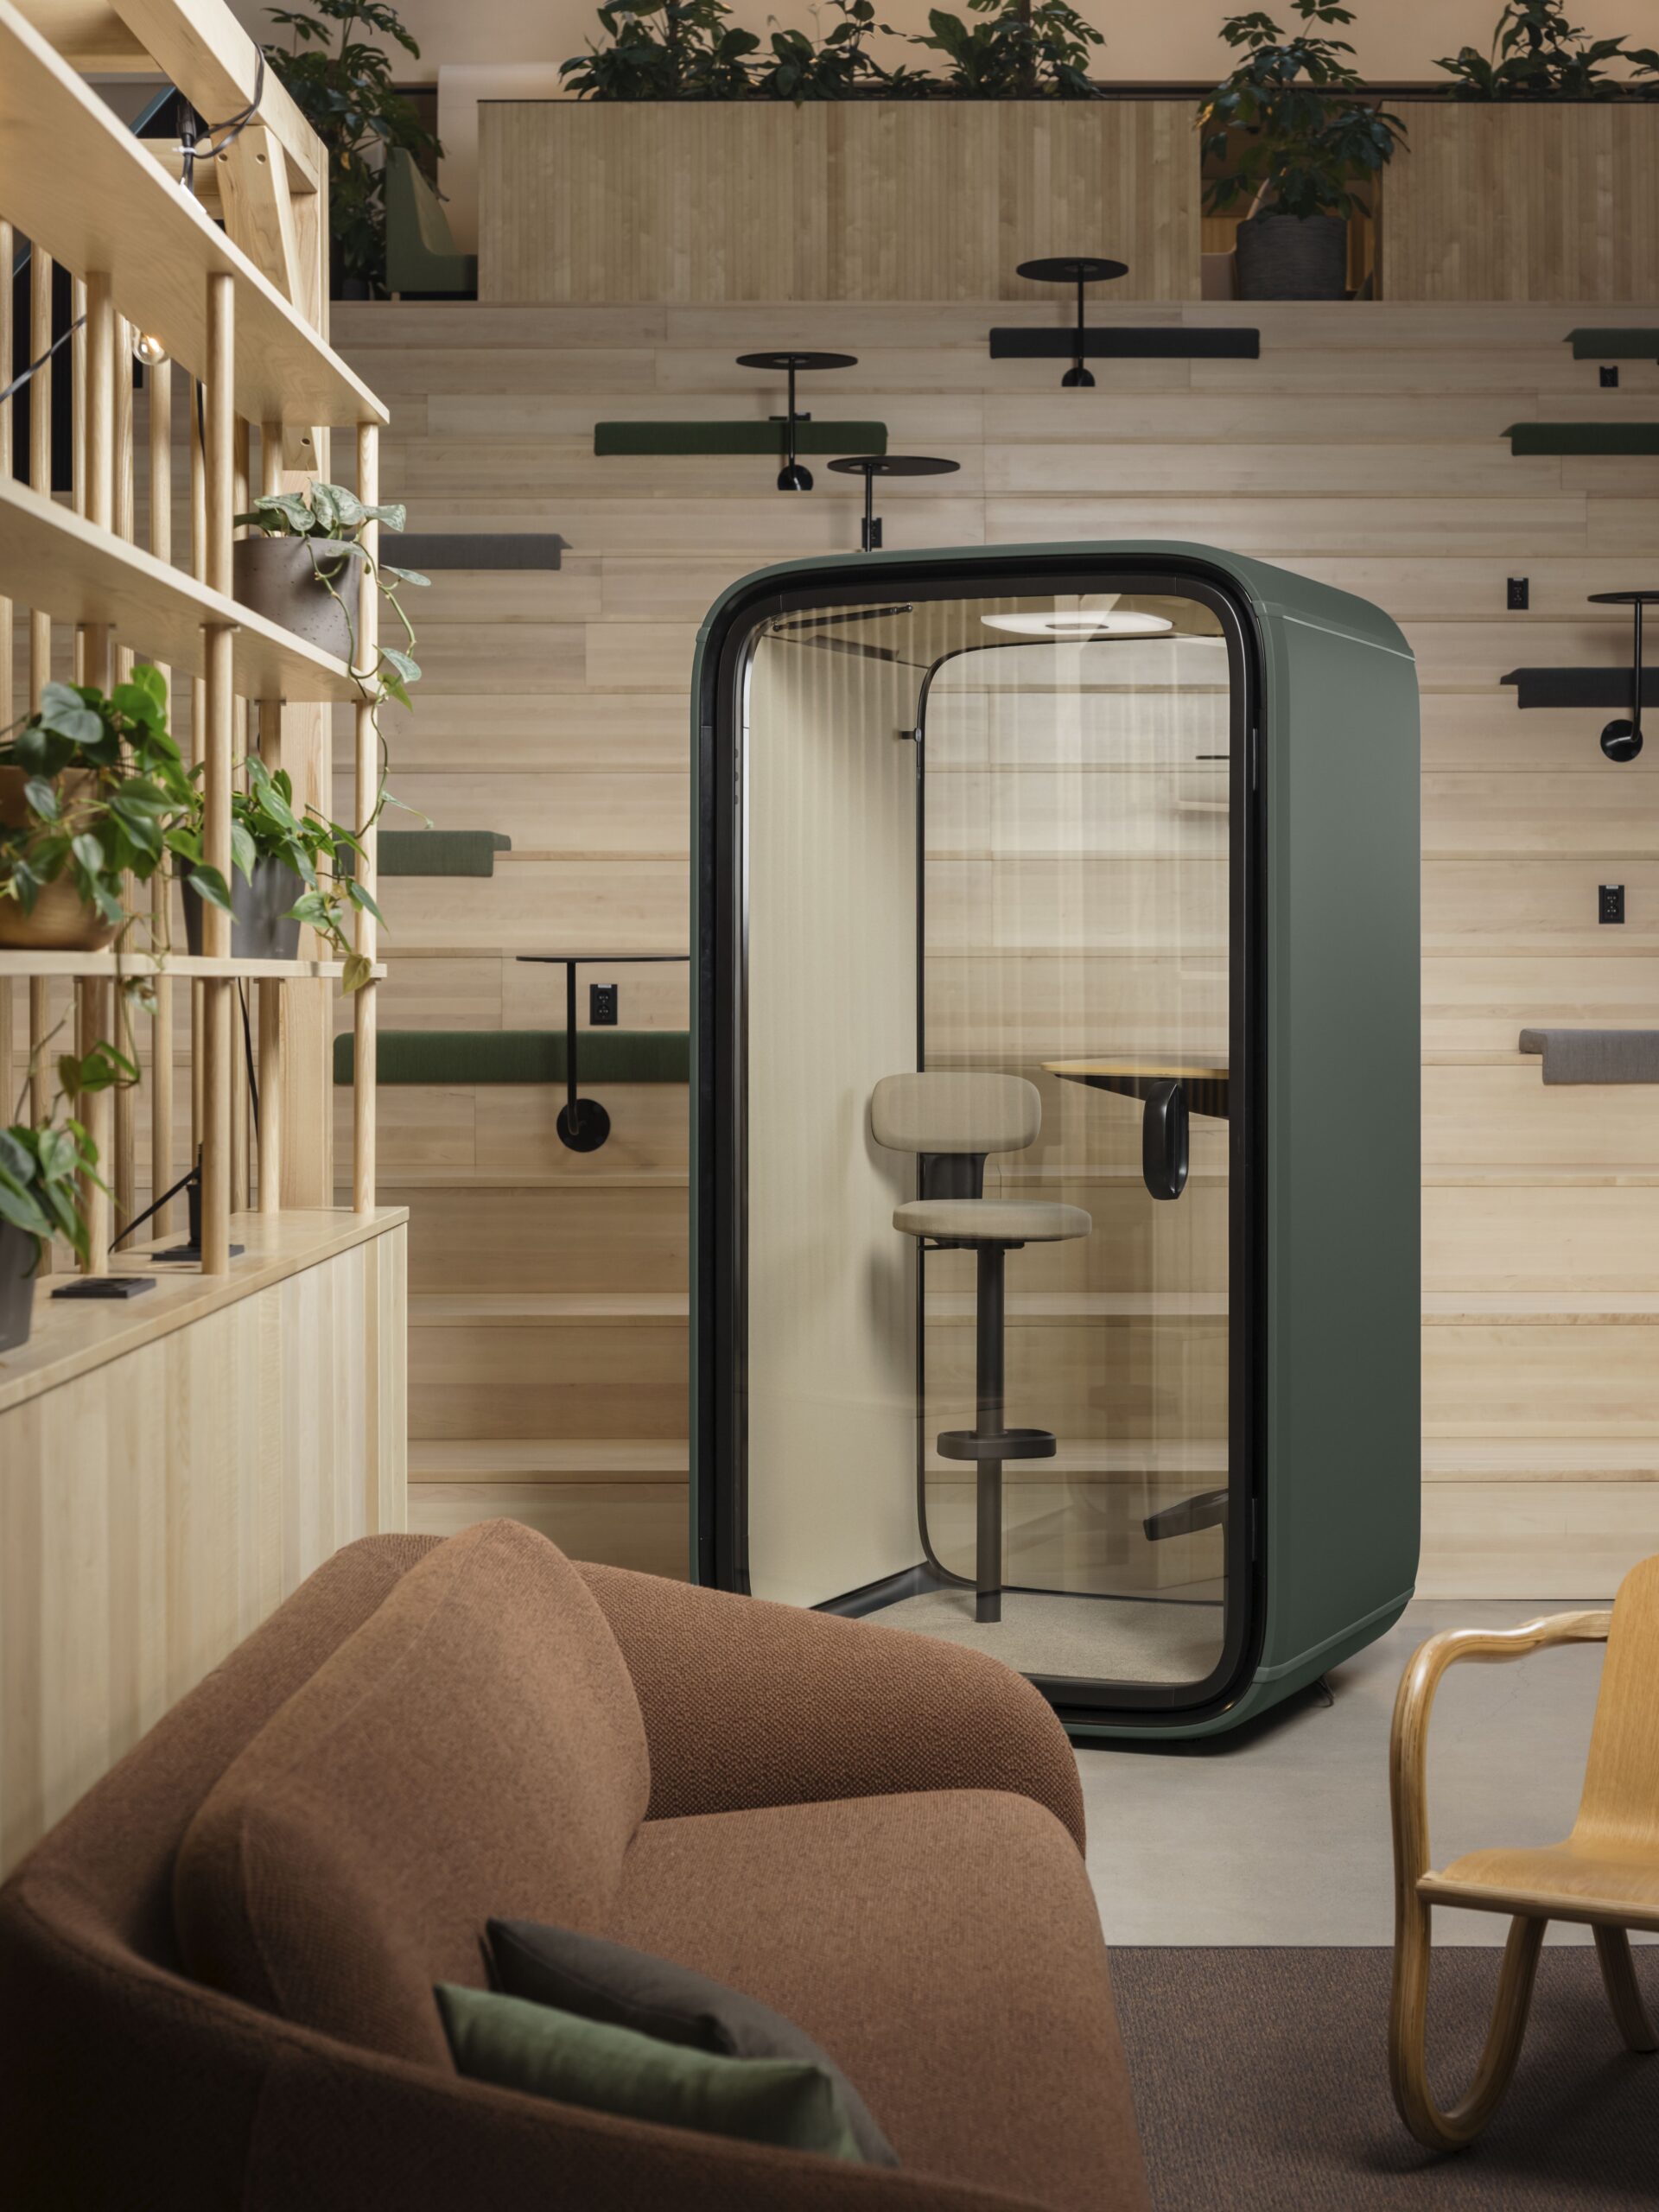 Super Smart Sofa Revolutionizing Home Furniture with Intelligent and Advanced Sofa Technology